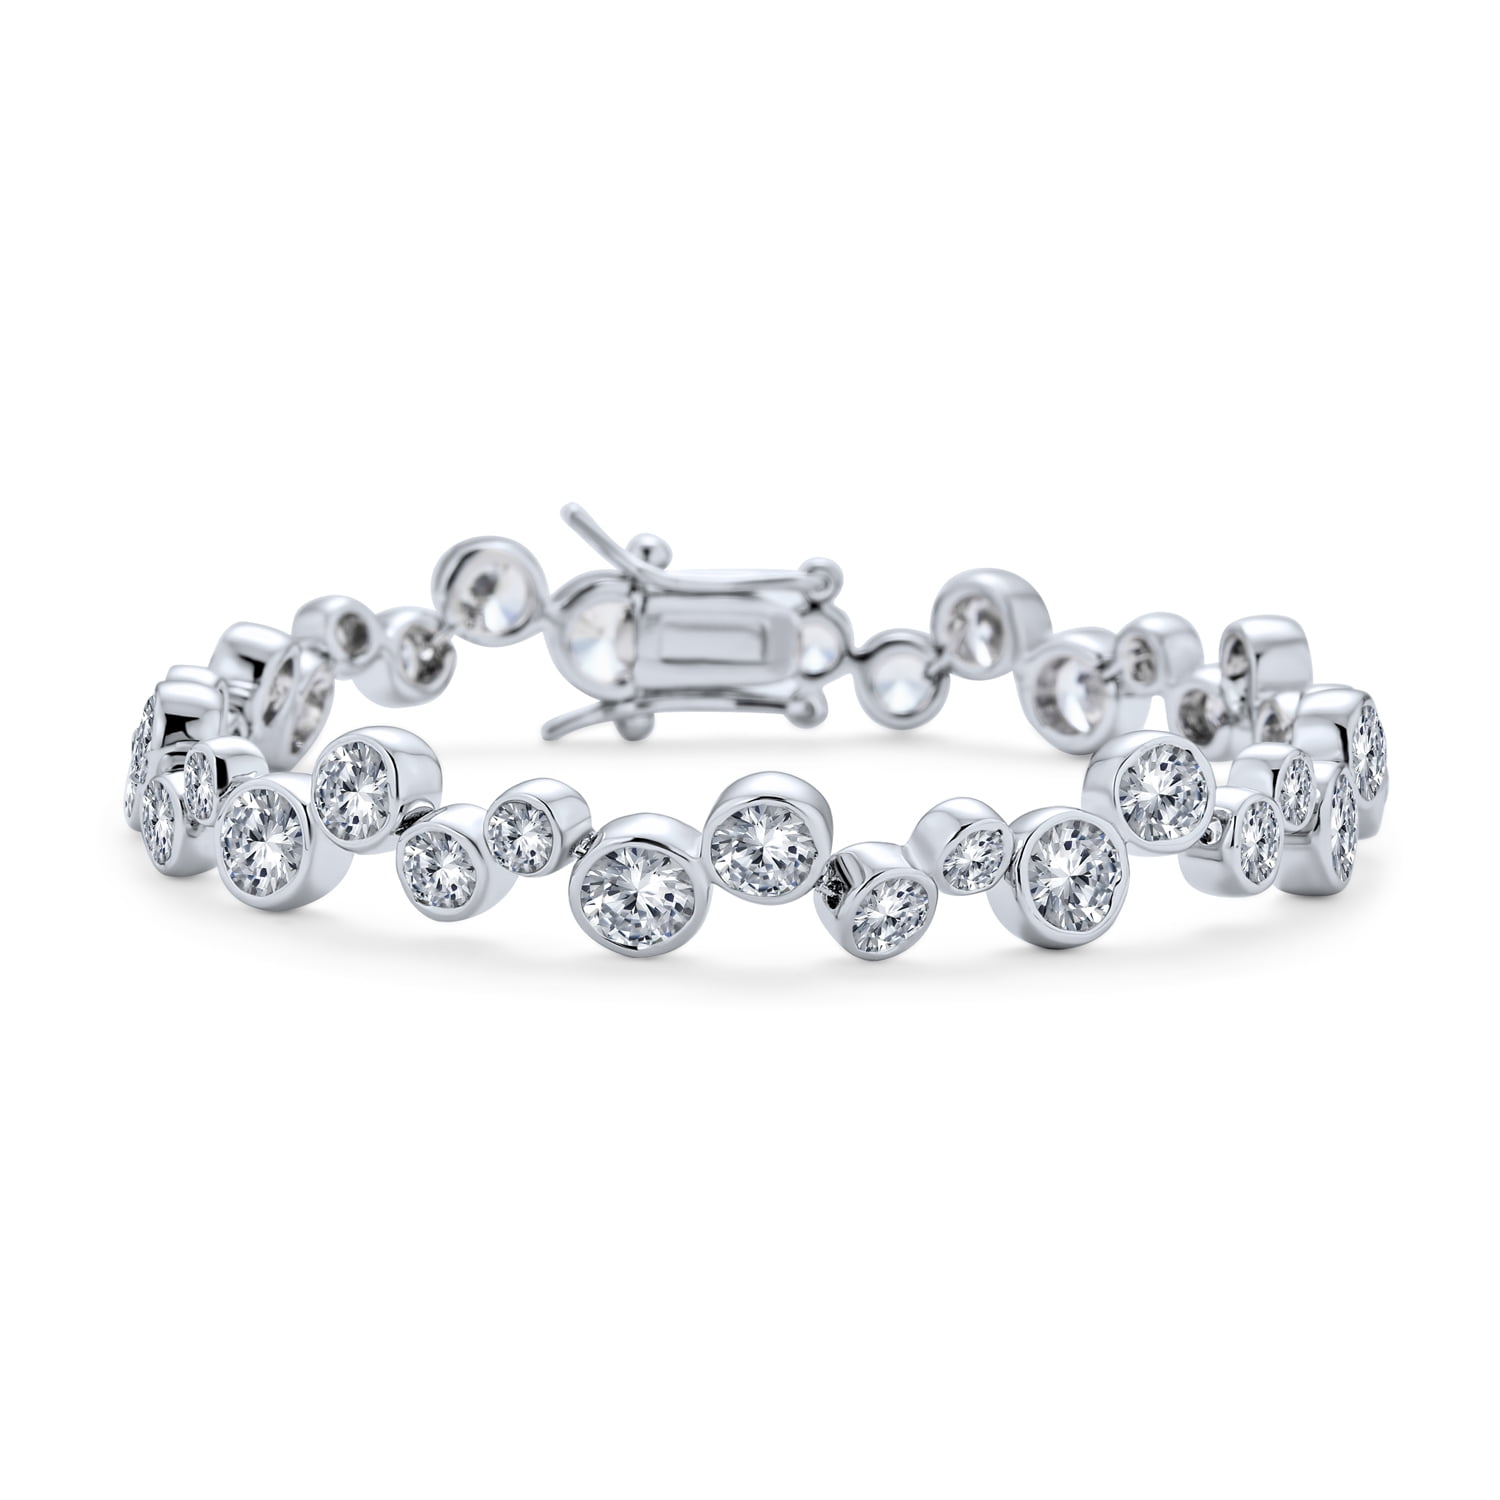 Ocean Shell Blue Crystal Beads Chain Bangle Bracelet Women Girl Charm Jewelry jb